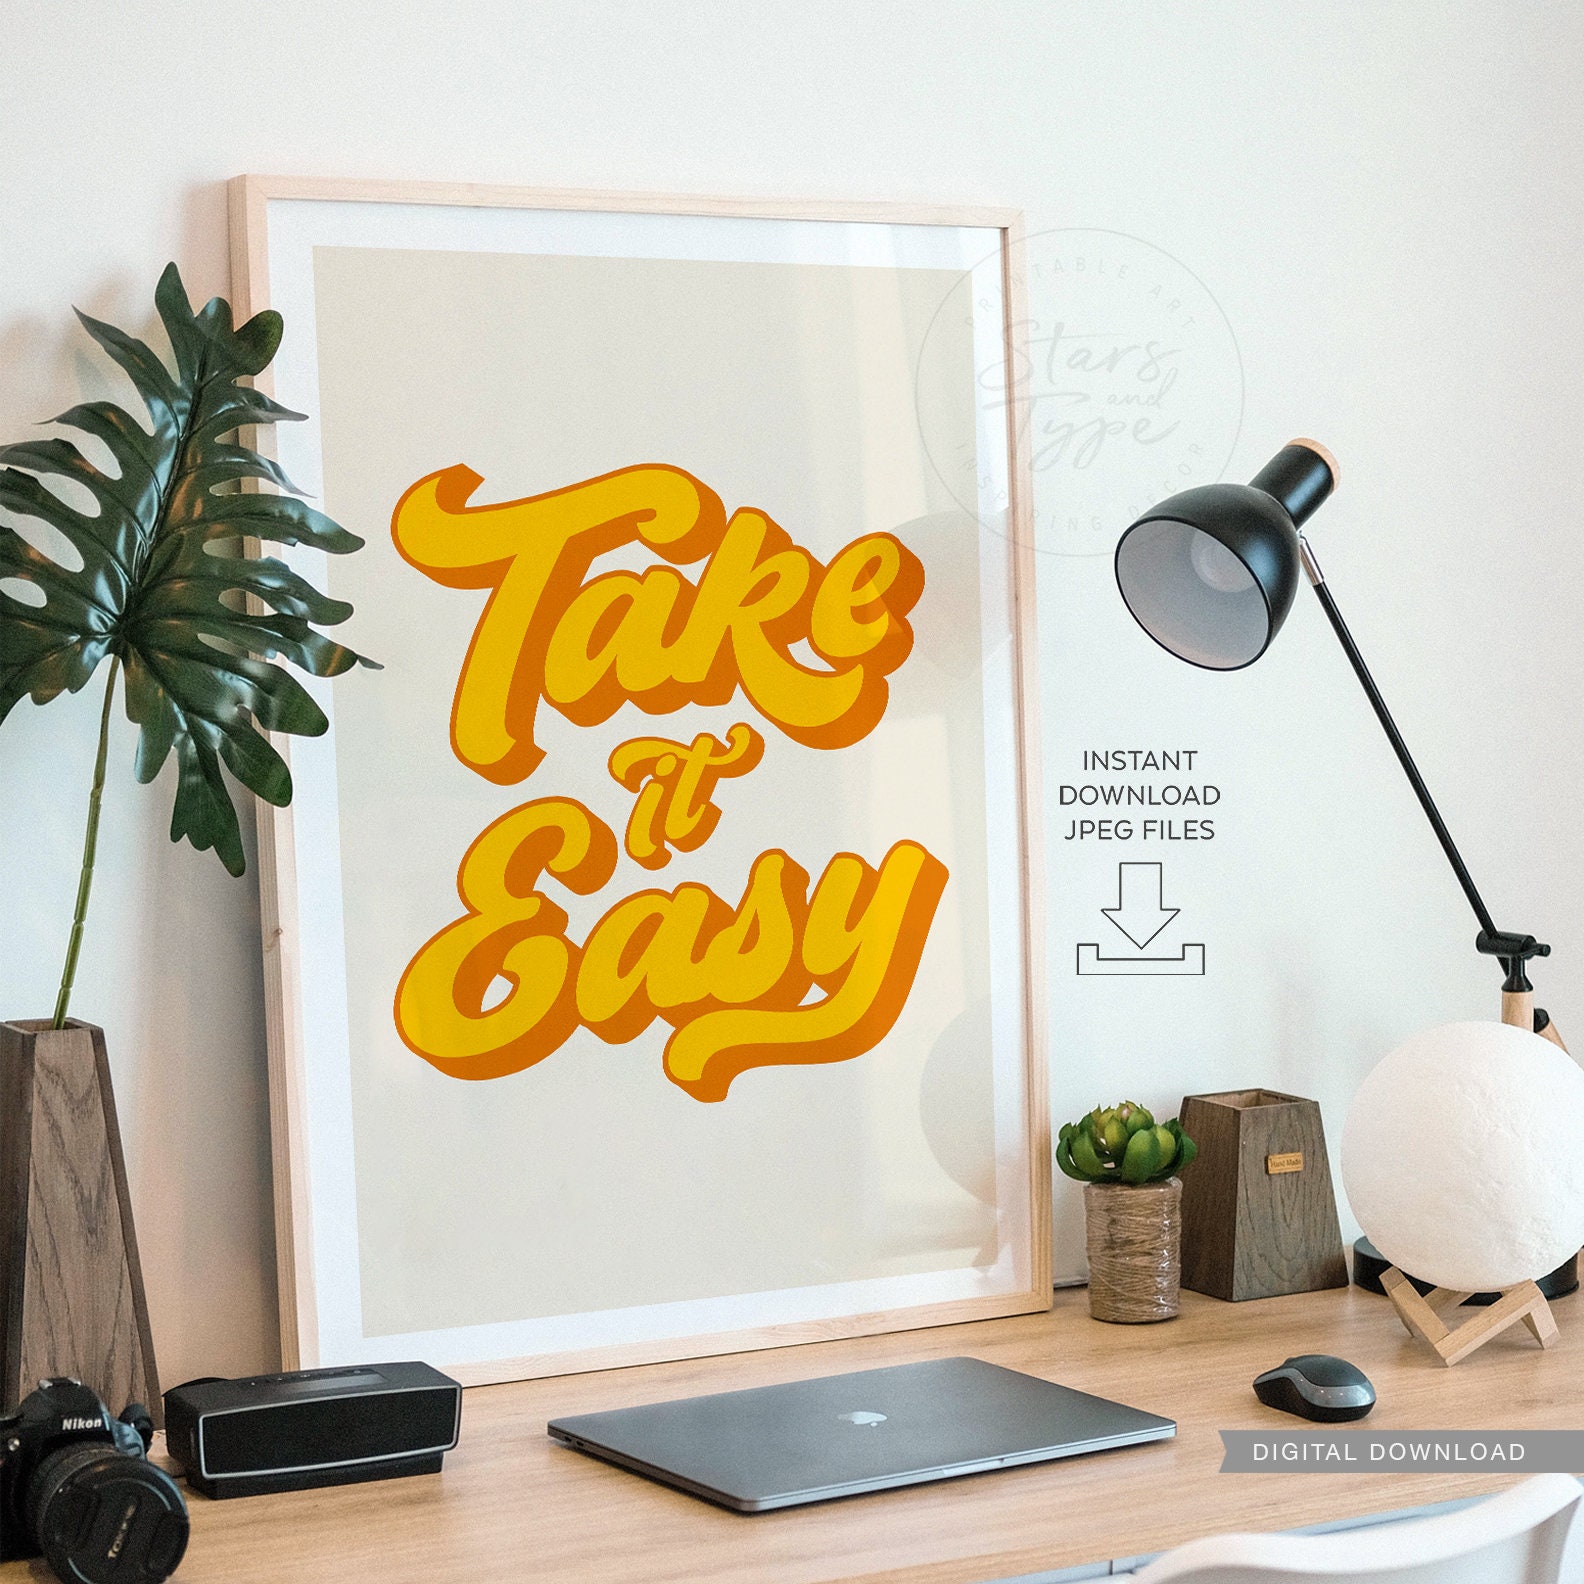 Take It Easy Print - Etsy